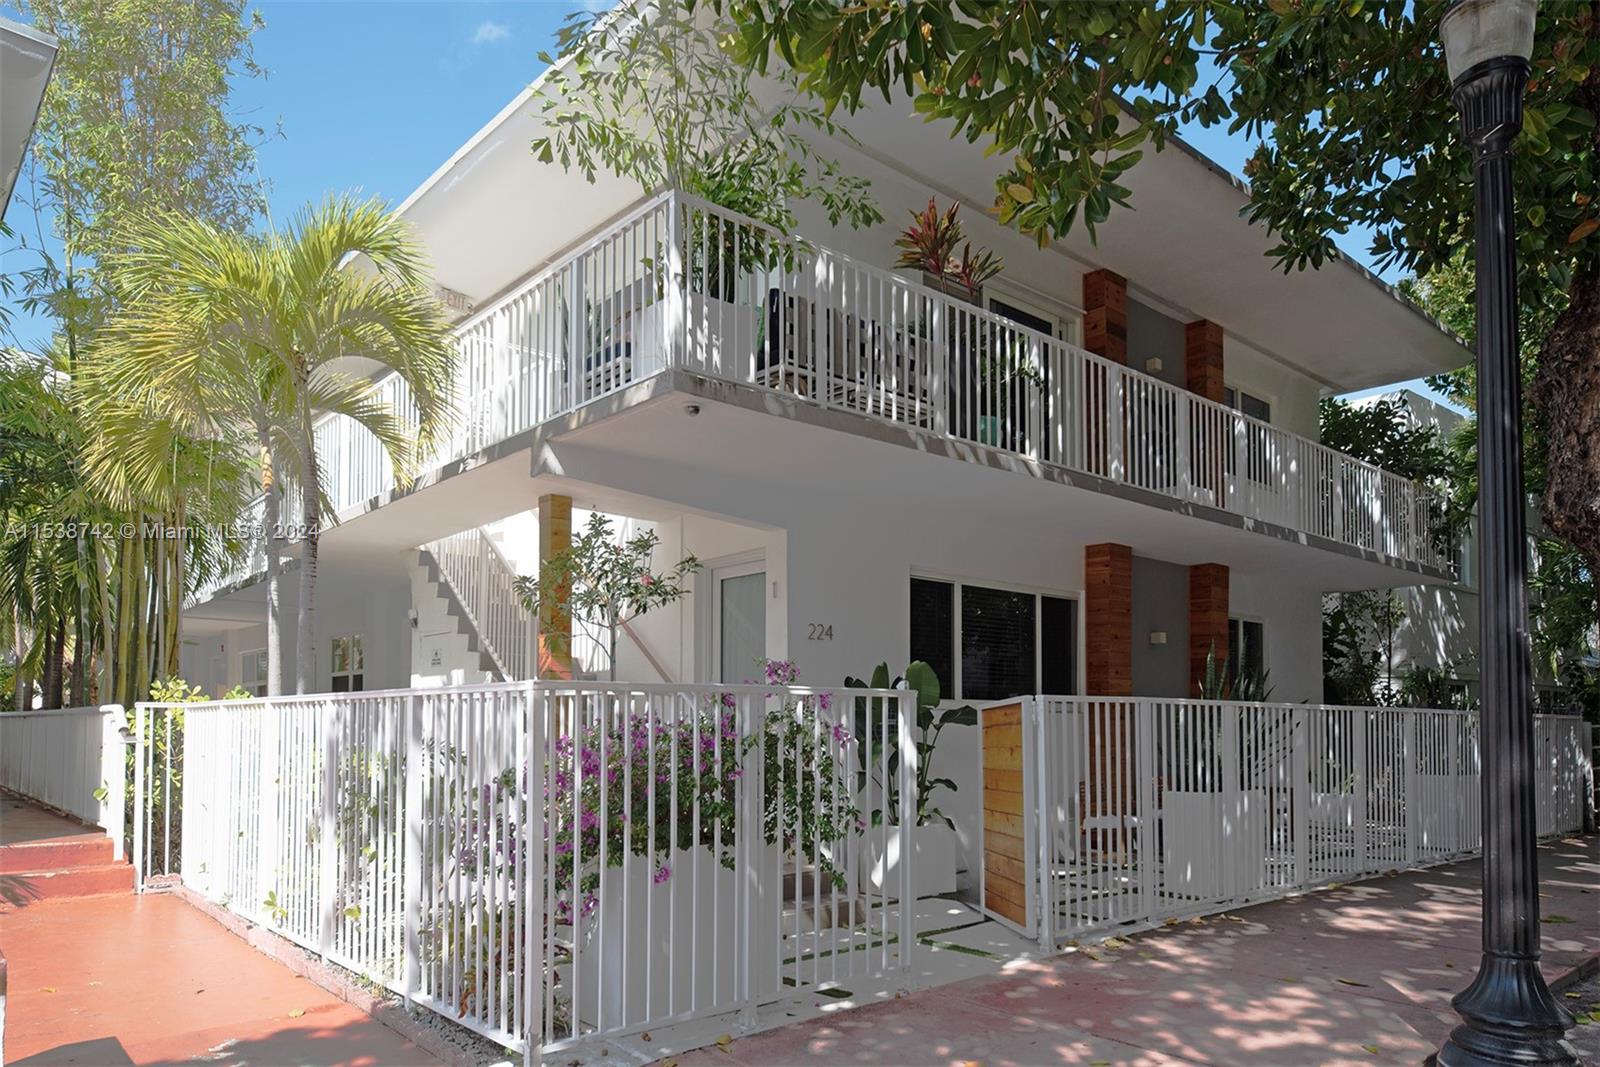 Rental Property at 224 Meridian Ave 9, Miami Beach, Miami-Dade County, Florida - Bathrooms: 1  - $2,000 MO.